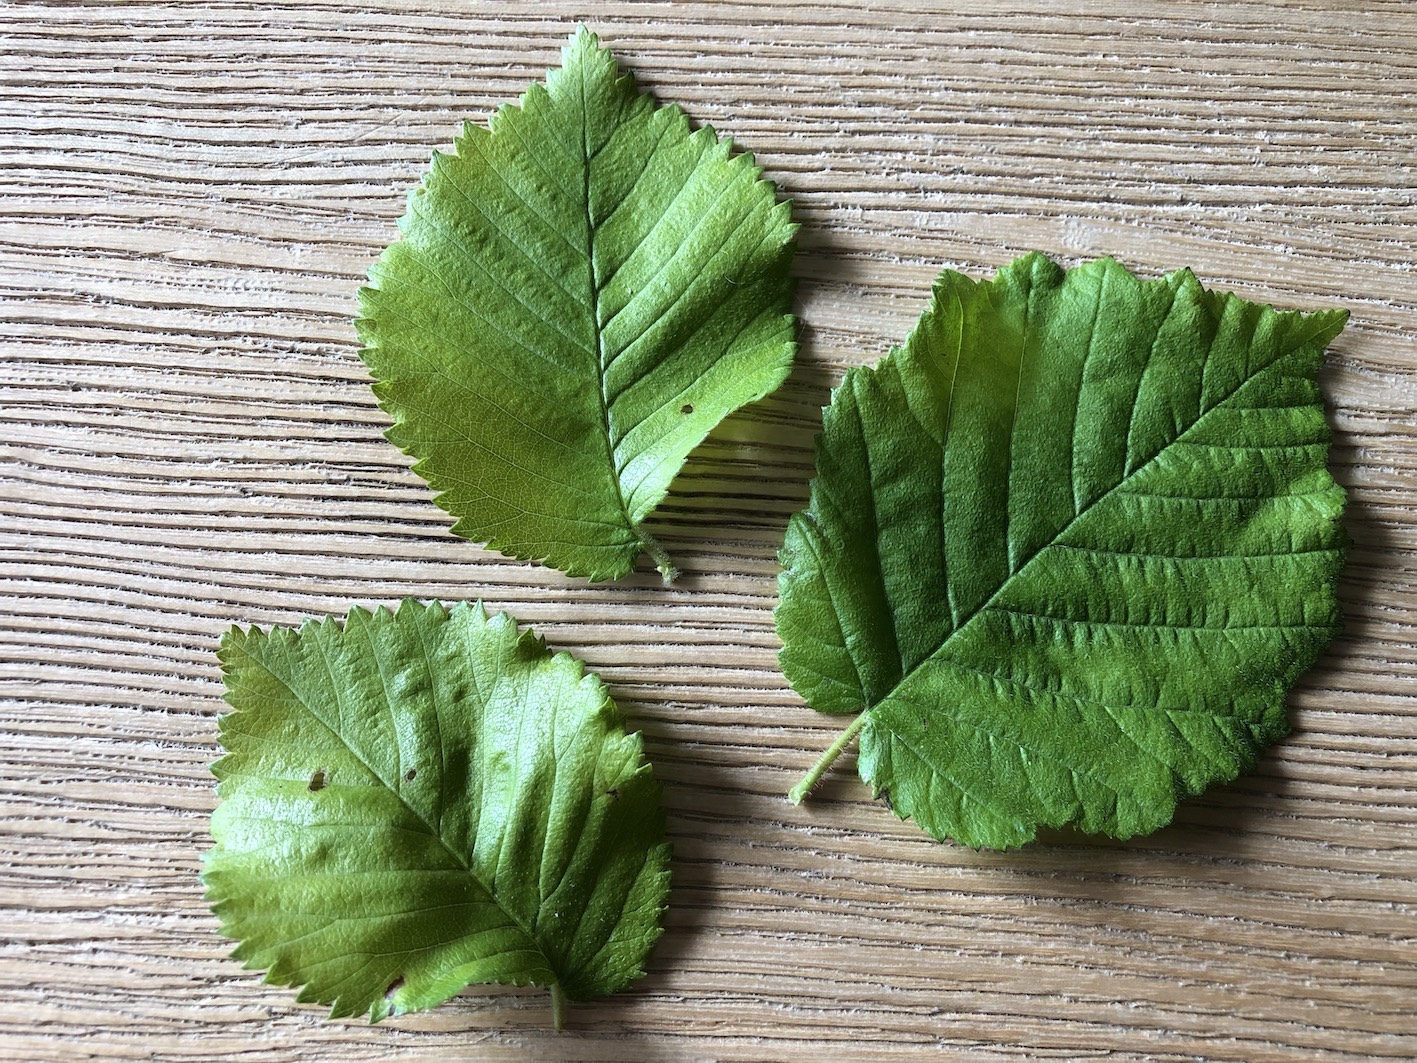 Elm leaves and hazel